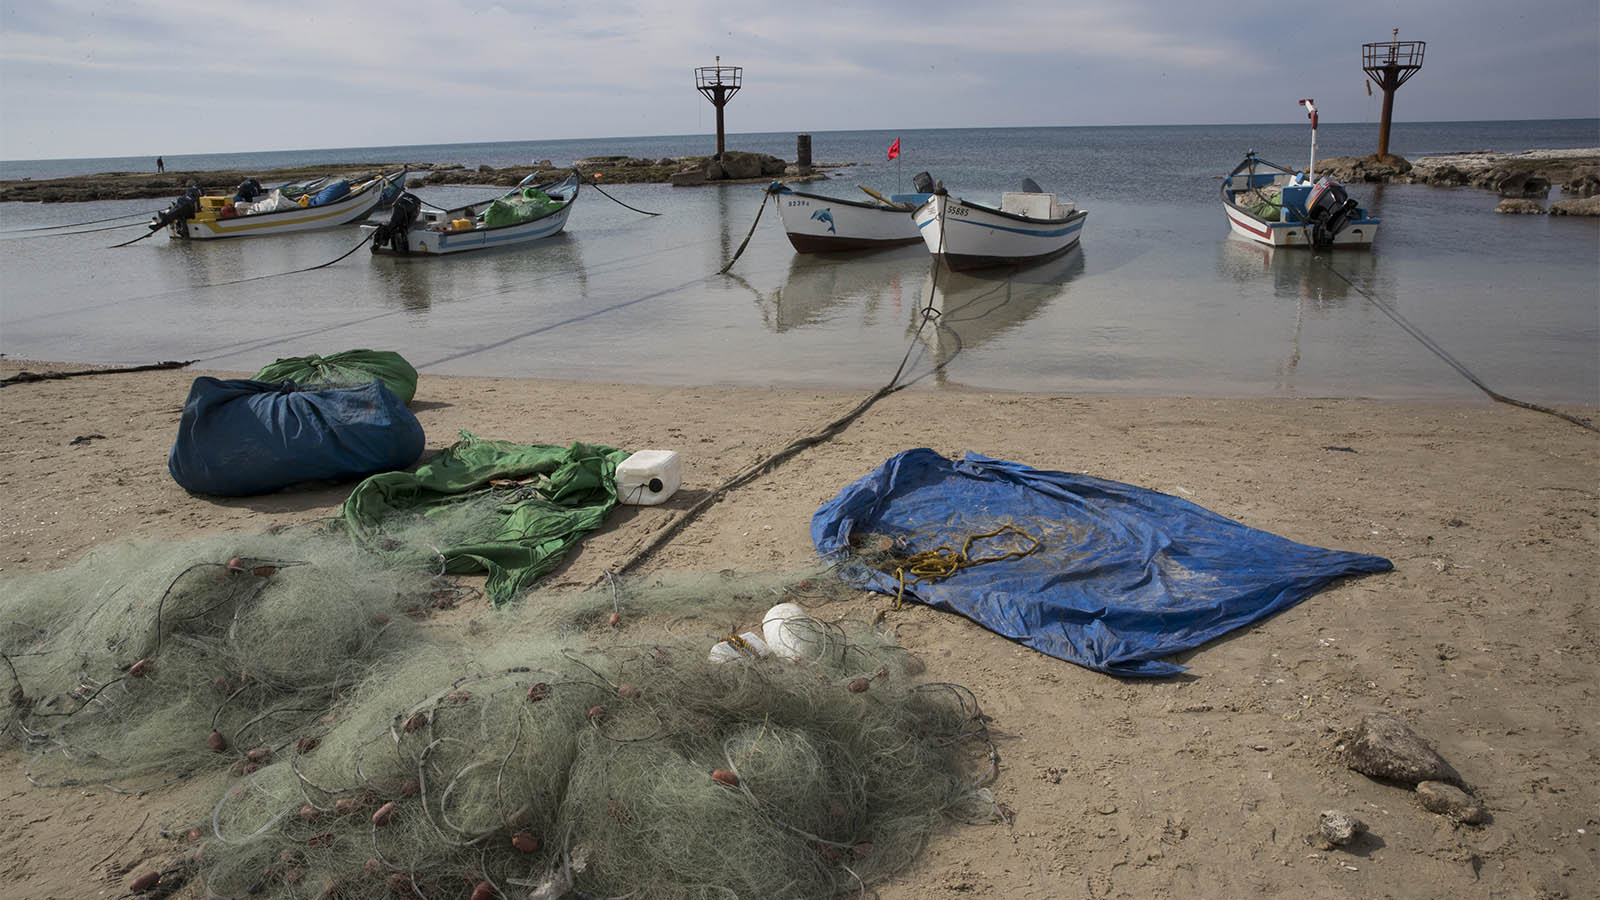 Fishing boats and fishing nets on the beach in the Israeli Arab town of Jisr az-Zarqa, on February 4, 2017. Photograph by Nati Shohat/Flash90